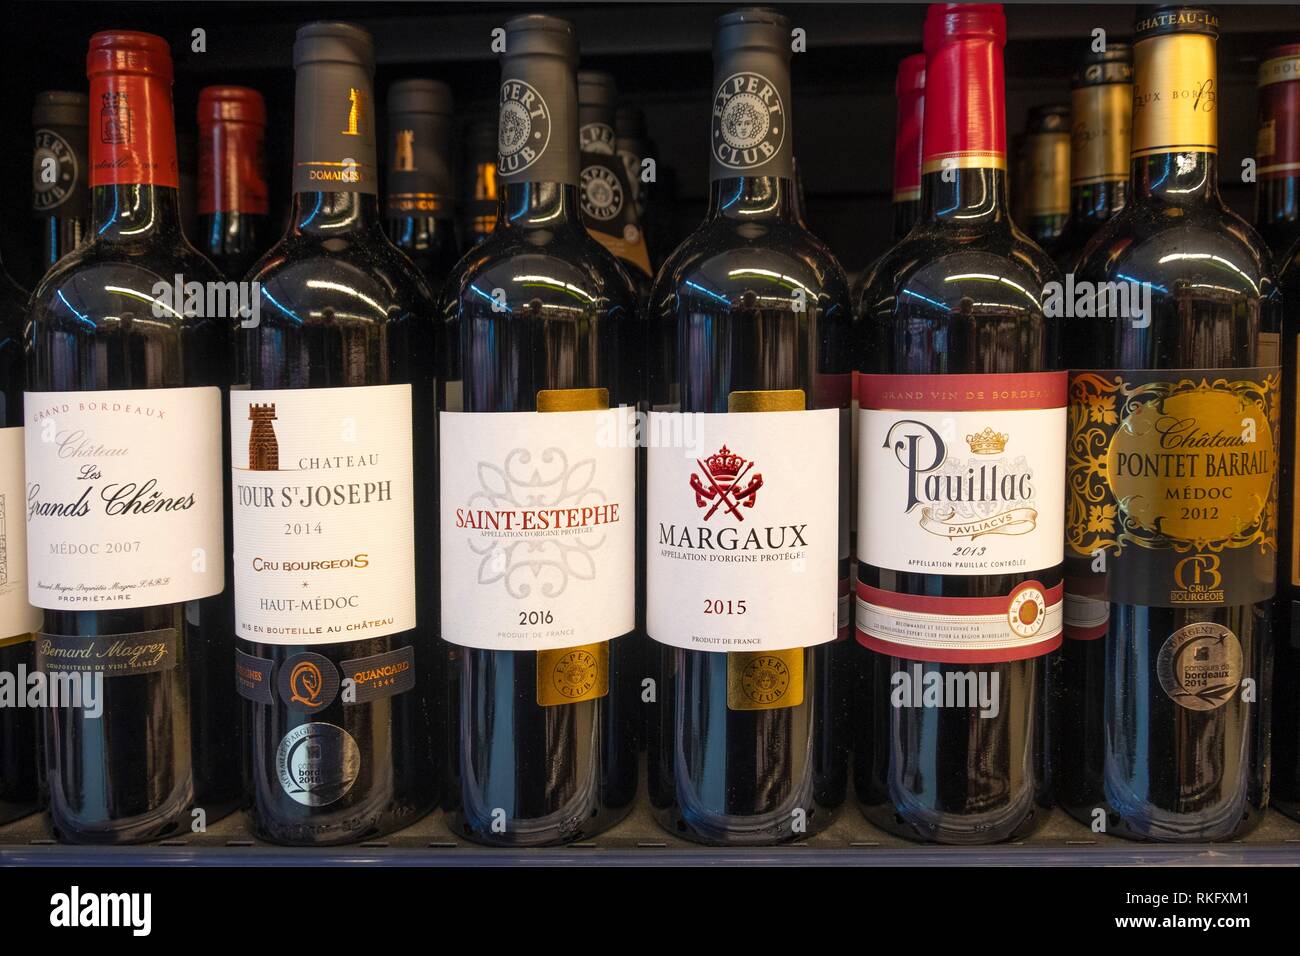 France, Food and beverage, Bordeaux wine bottles of different Medoc areas:Medoc,Haut Medoc,Saint Estephe,Margaux,Pauillac. Stock Photo